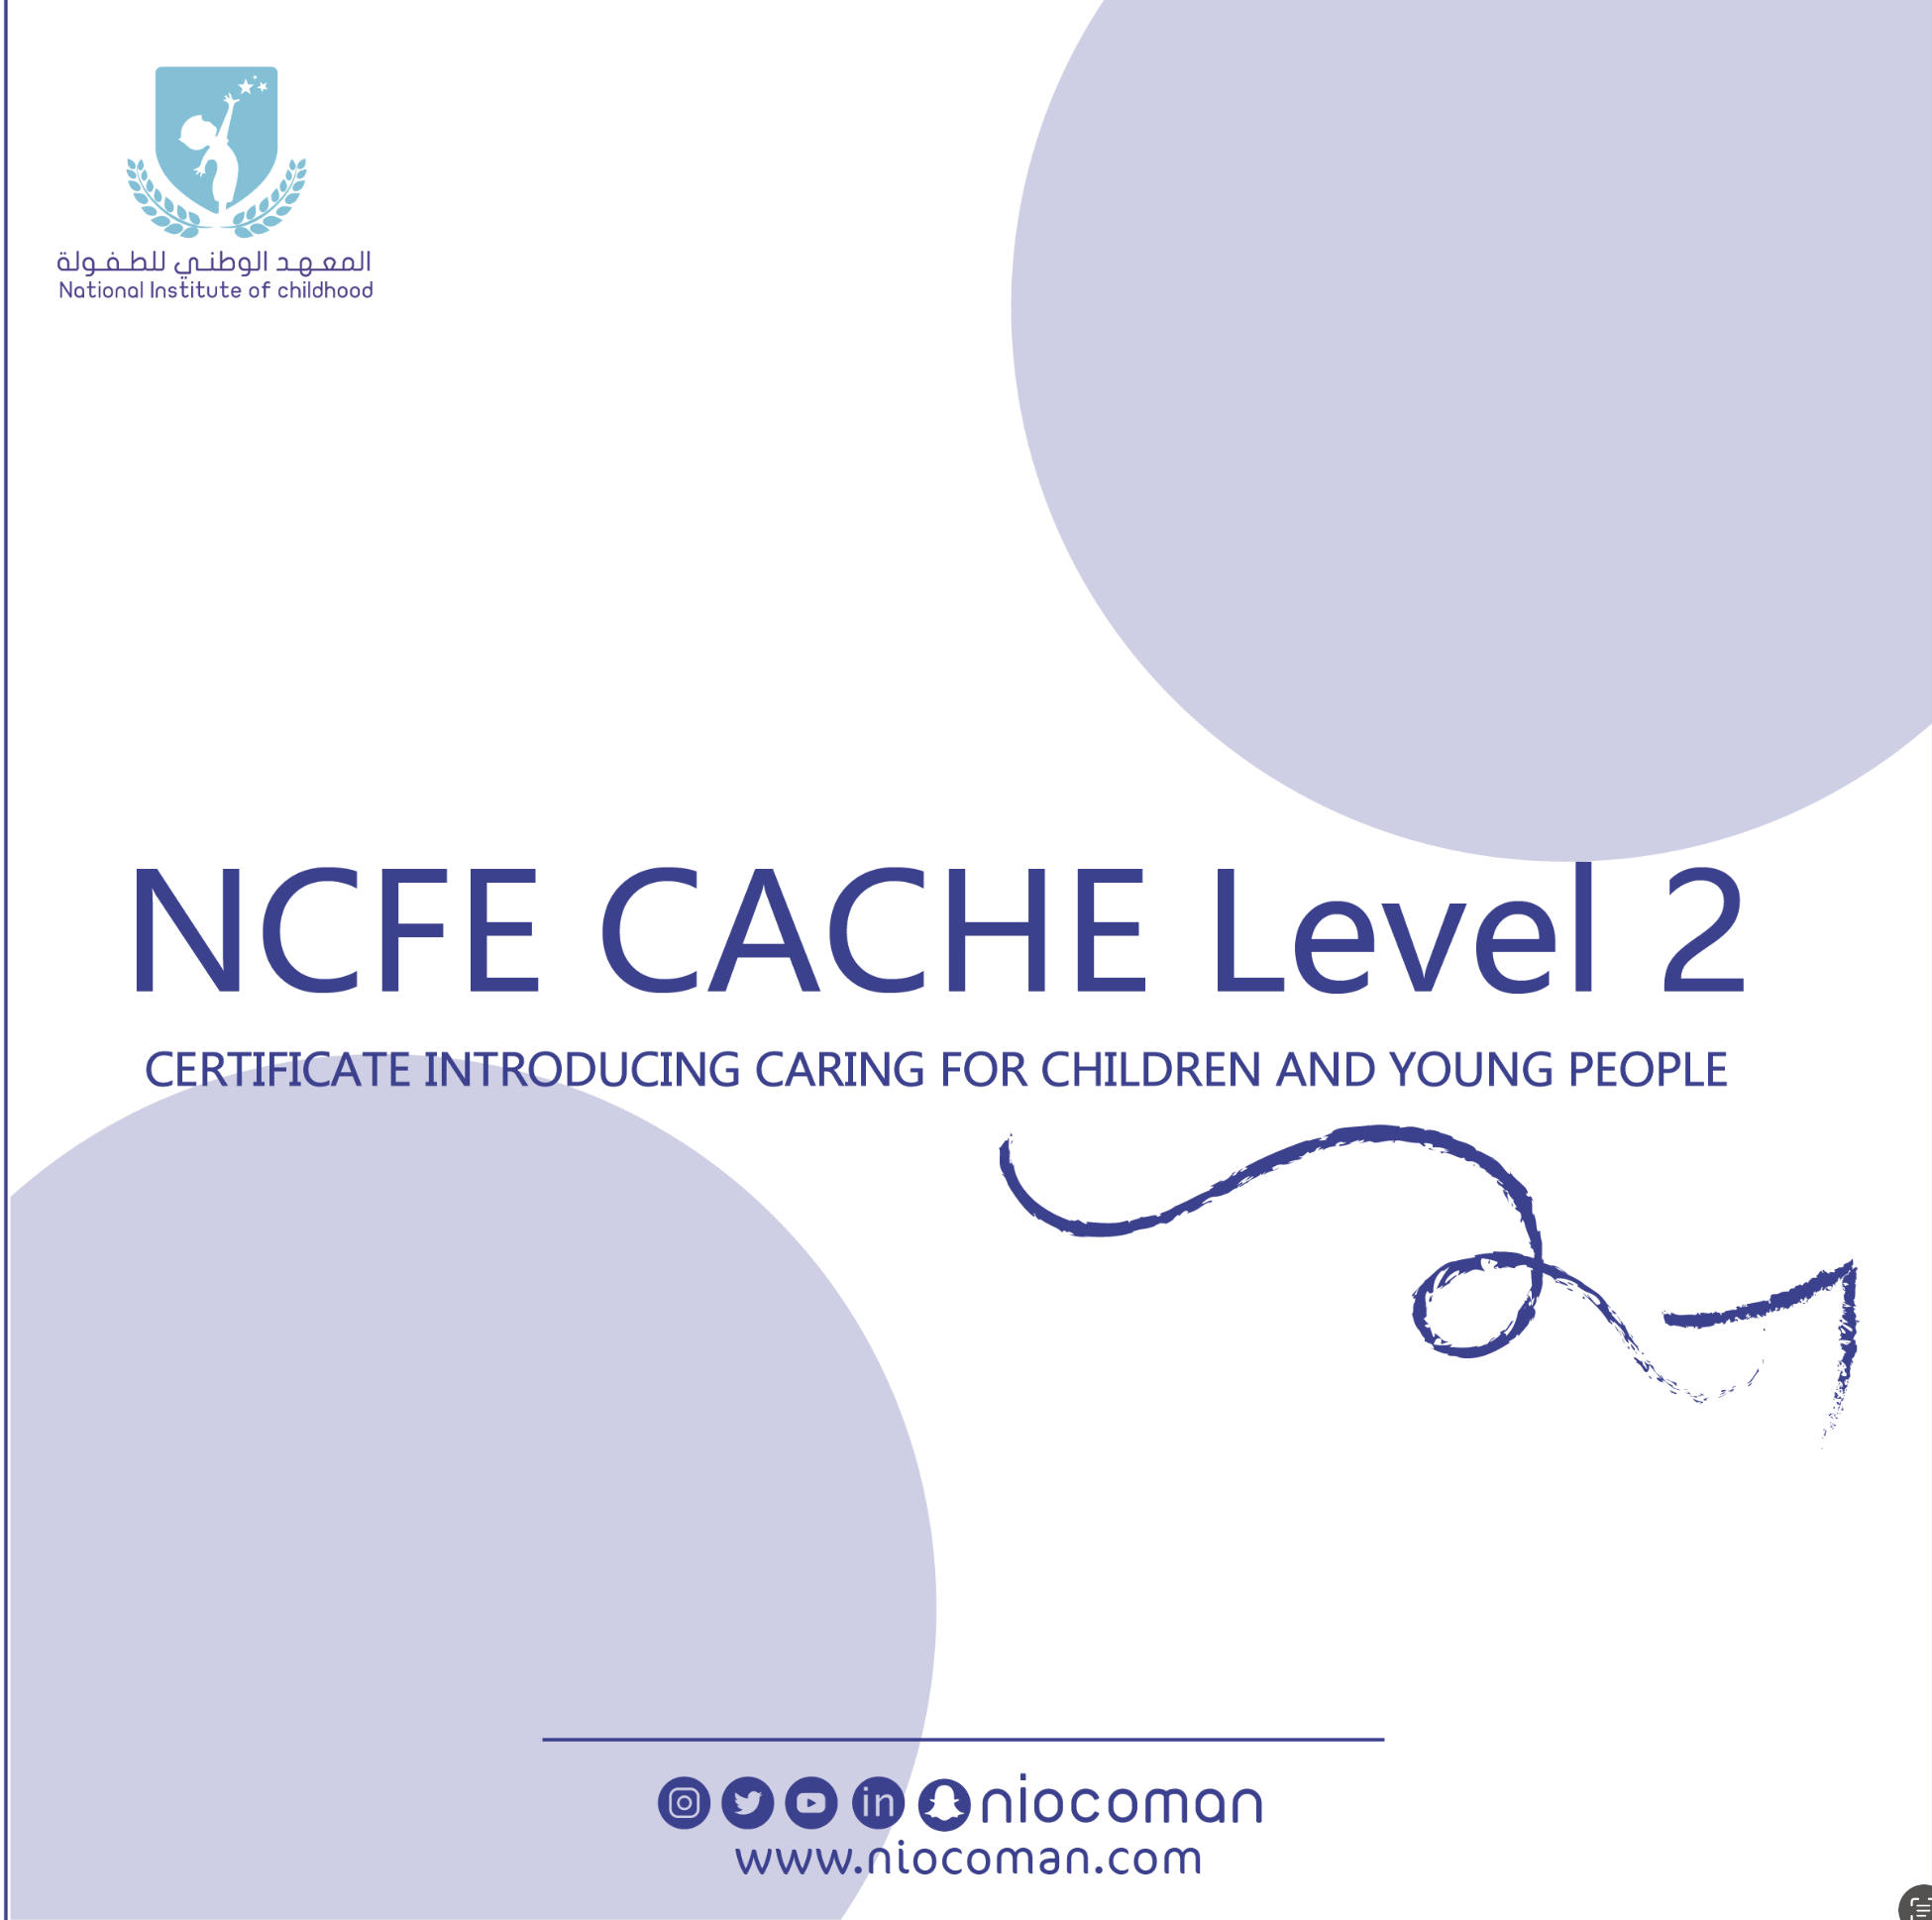 NCFE CACHE Level 2 